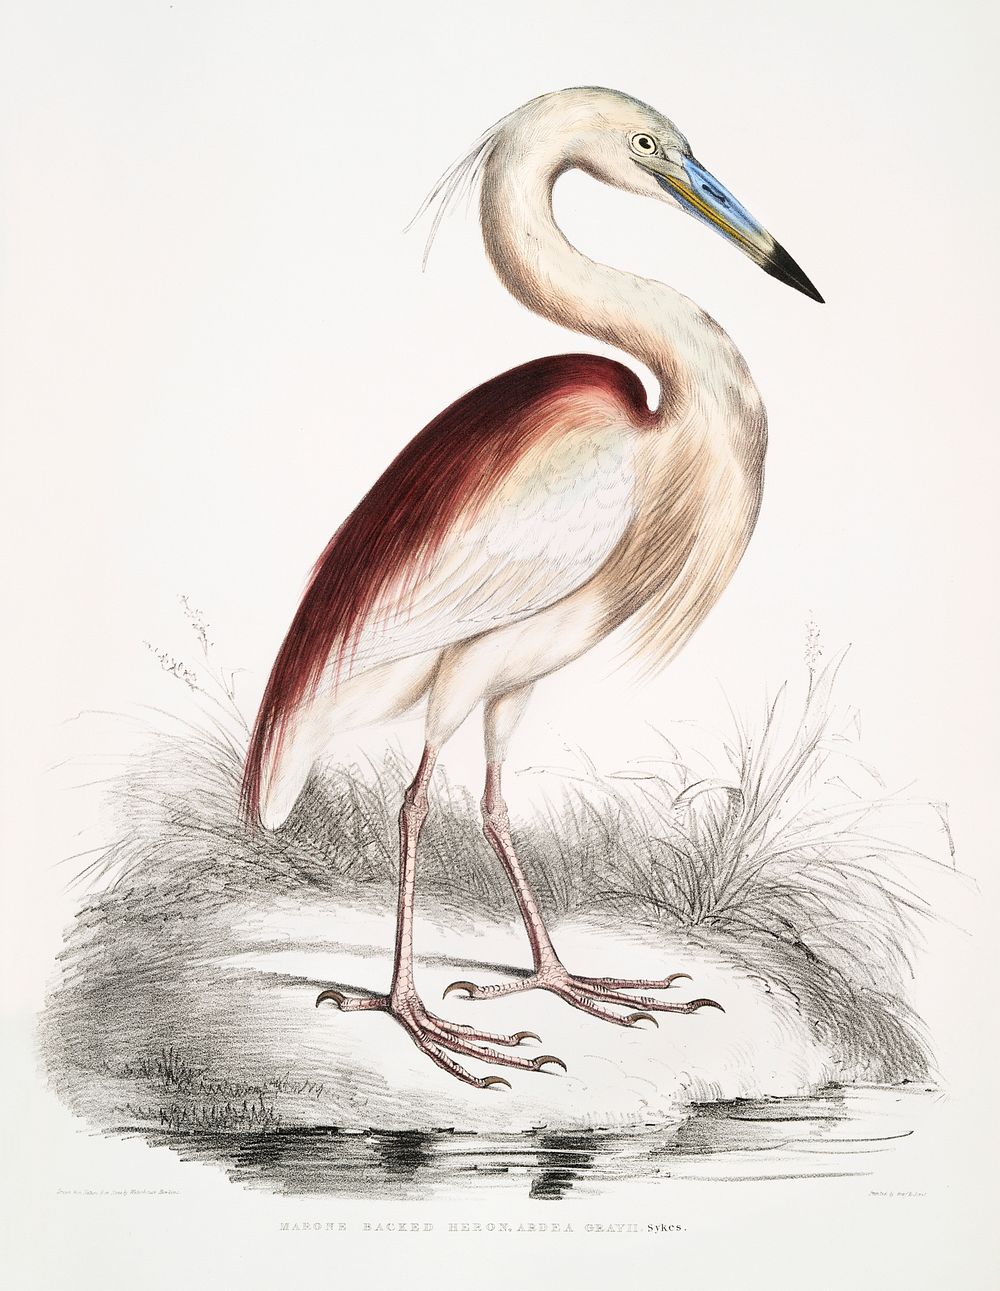 Marone Backed Heron (Ardea Grayii) from Illustrations of Indian zoology (1830-1834) by John Edward Gray (1800-1875).…